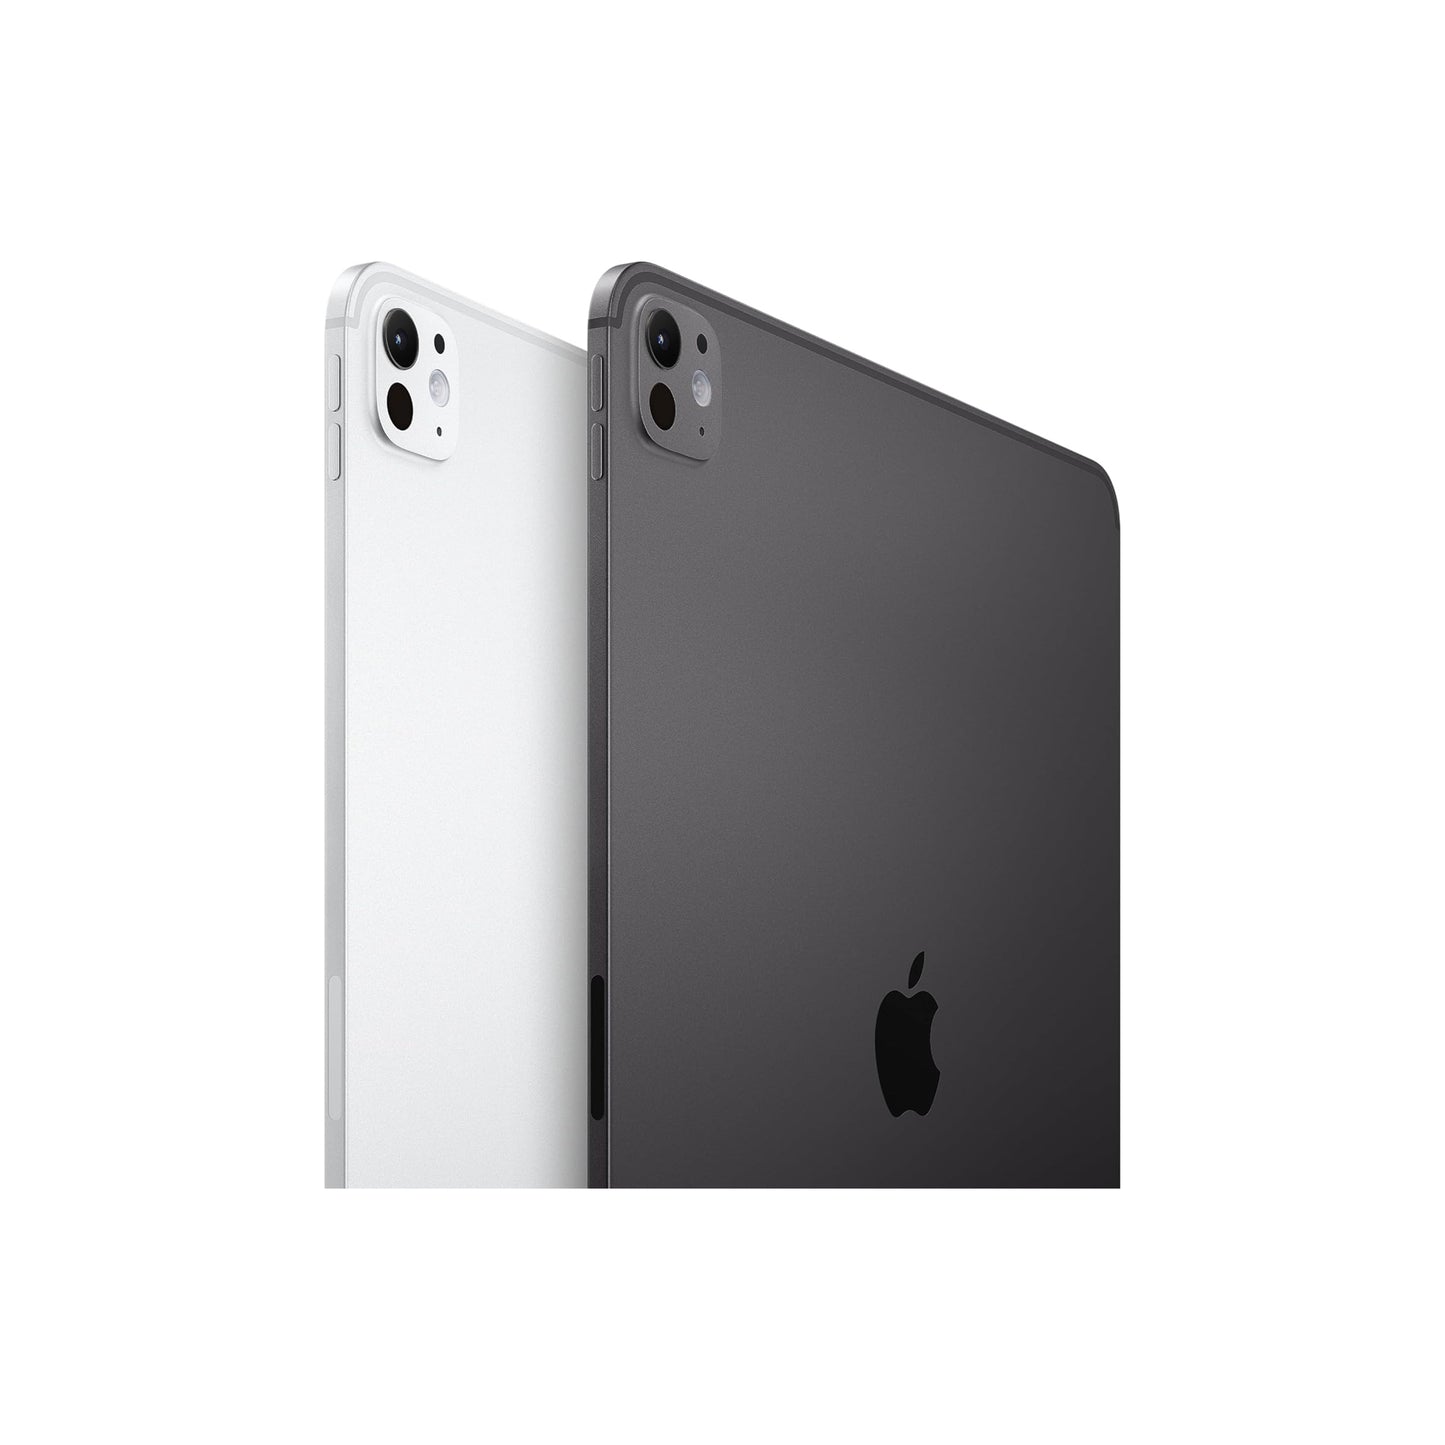 Apple iPad Pro 11 بوصة (M4): شاشة Ultra Retina XDR، 2 تيرابايت، كاميرا أمامية 12 ميجابكسل / كاميرا خلفية 12 ميجابكسل، ماسح ضوئي LiDAR، شبكة Wi-Fi 6E + 5G خلوية مع eSIM، معرف الوجه، عمر البطارية طوال اليوم - فضي